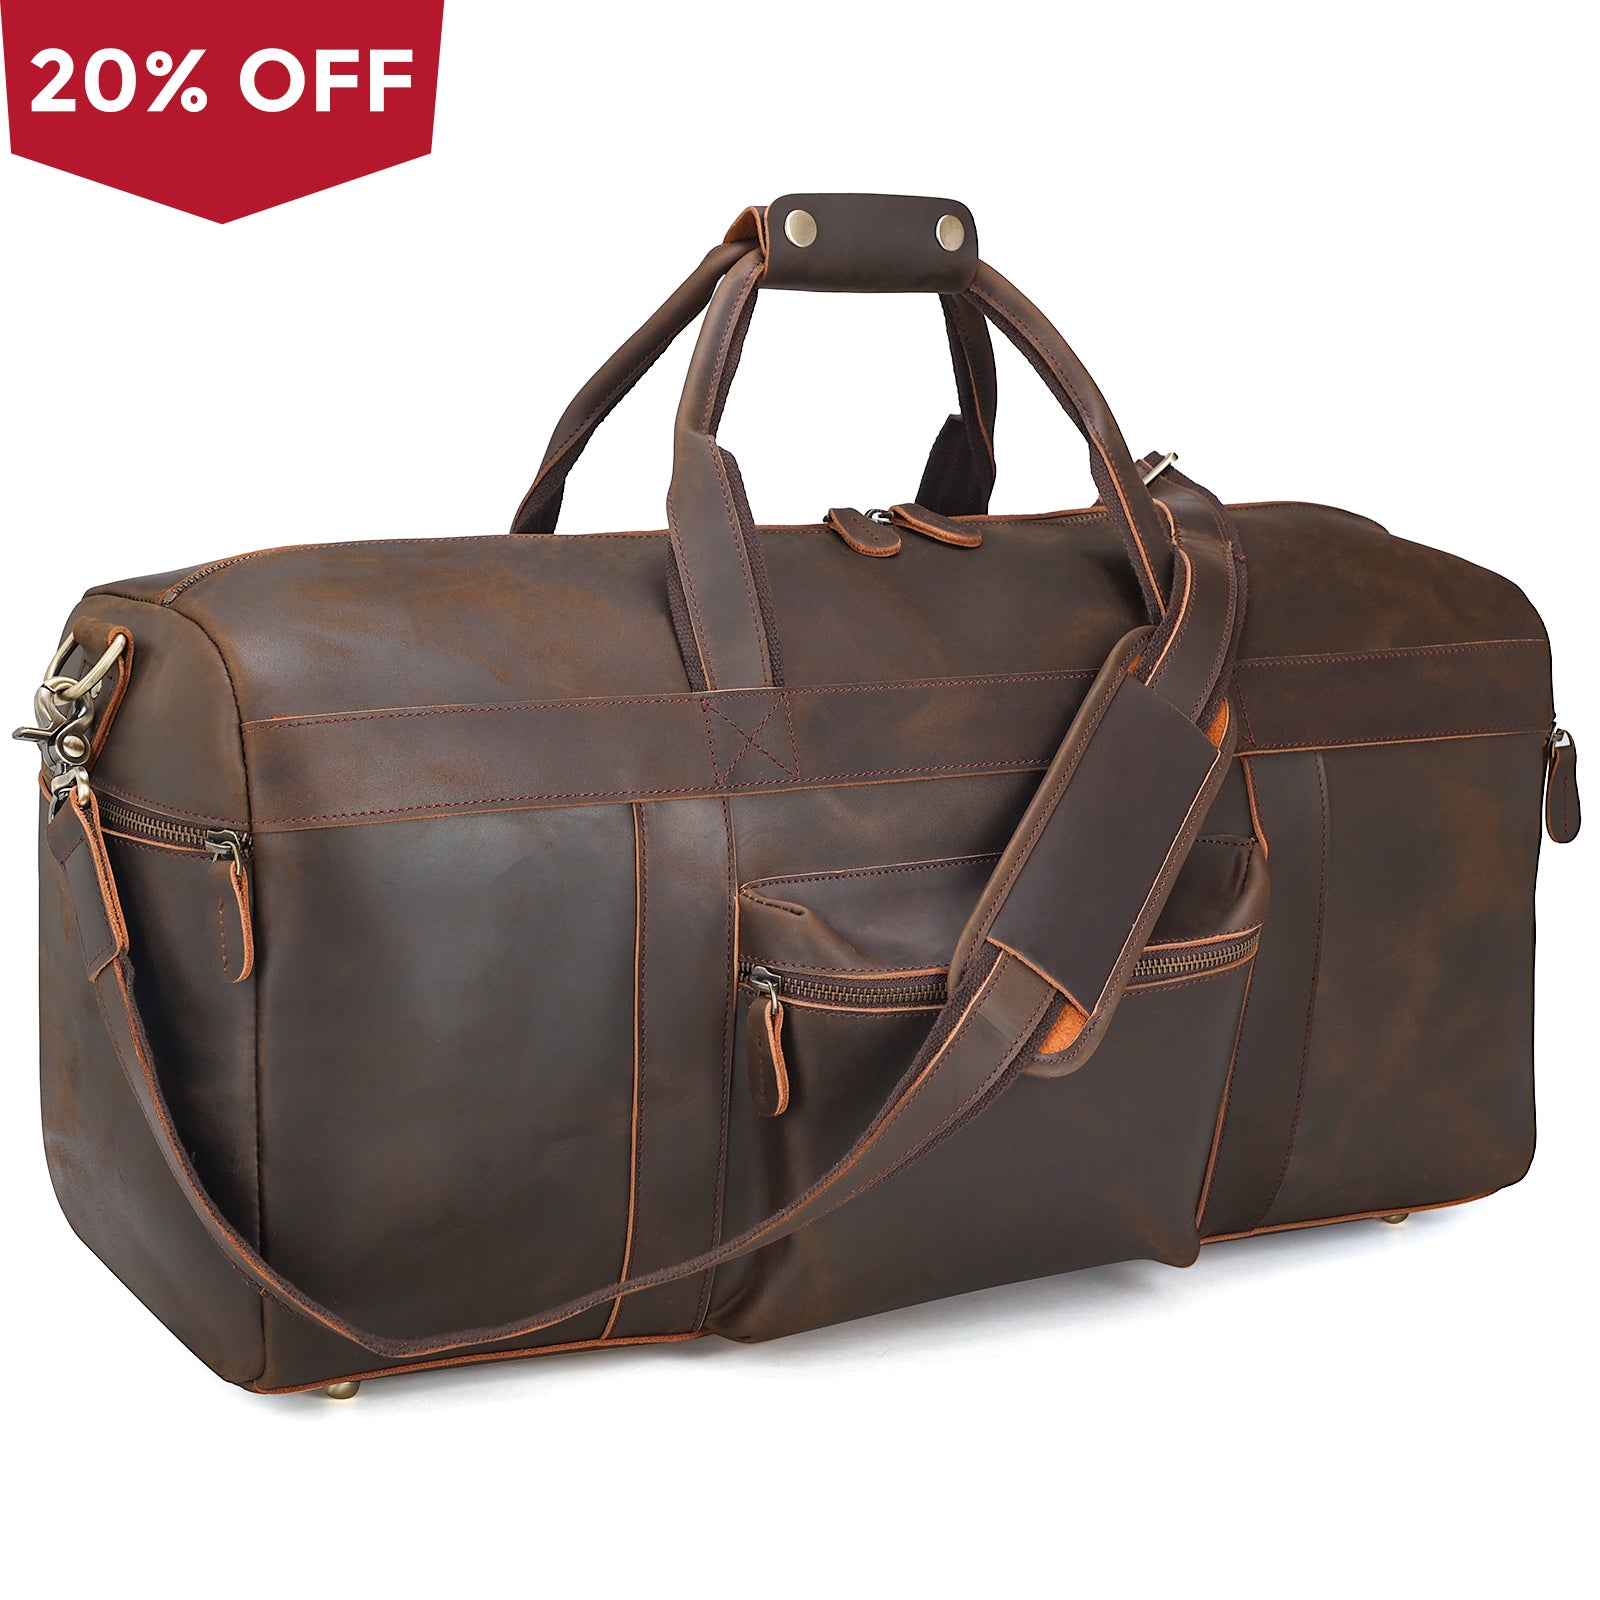 Polare 23'' Full Grain Leather Weekender Duffle Bag